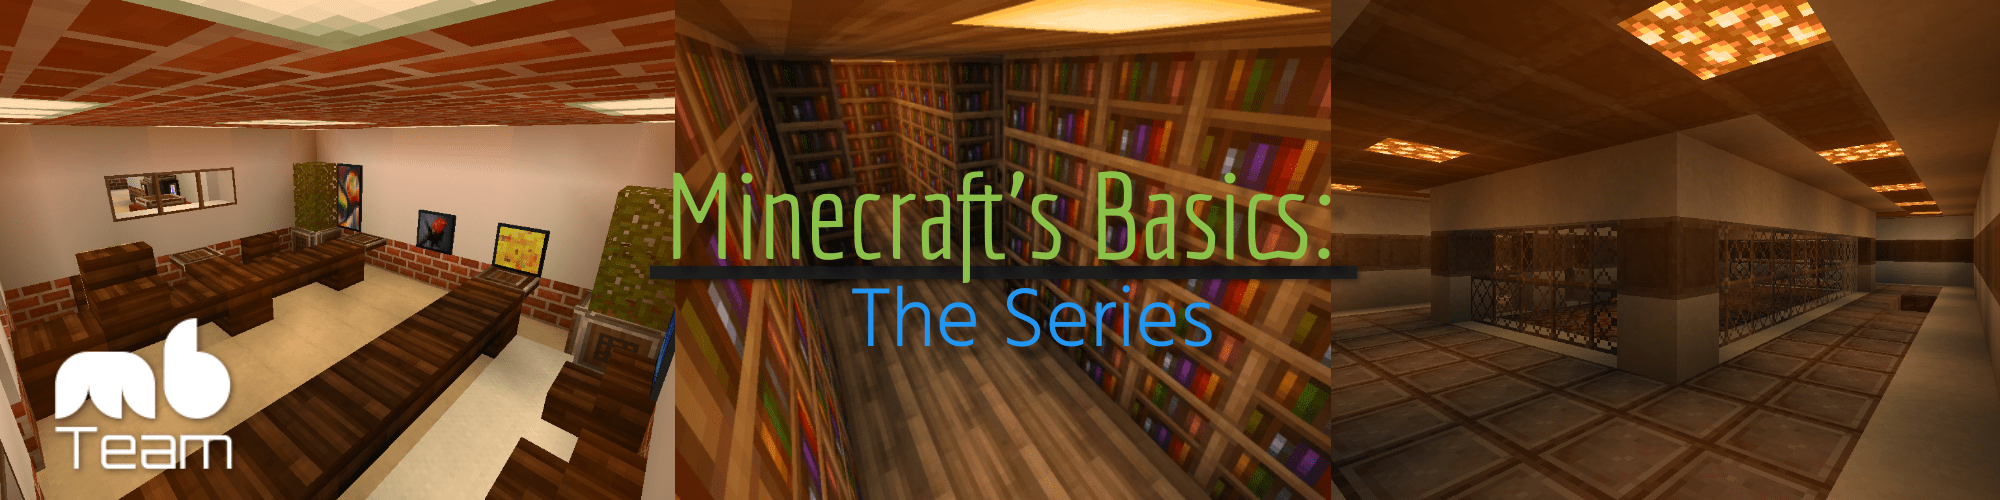 Minecraft's Basics: The Series